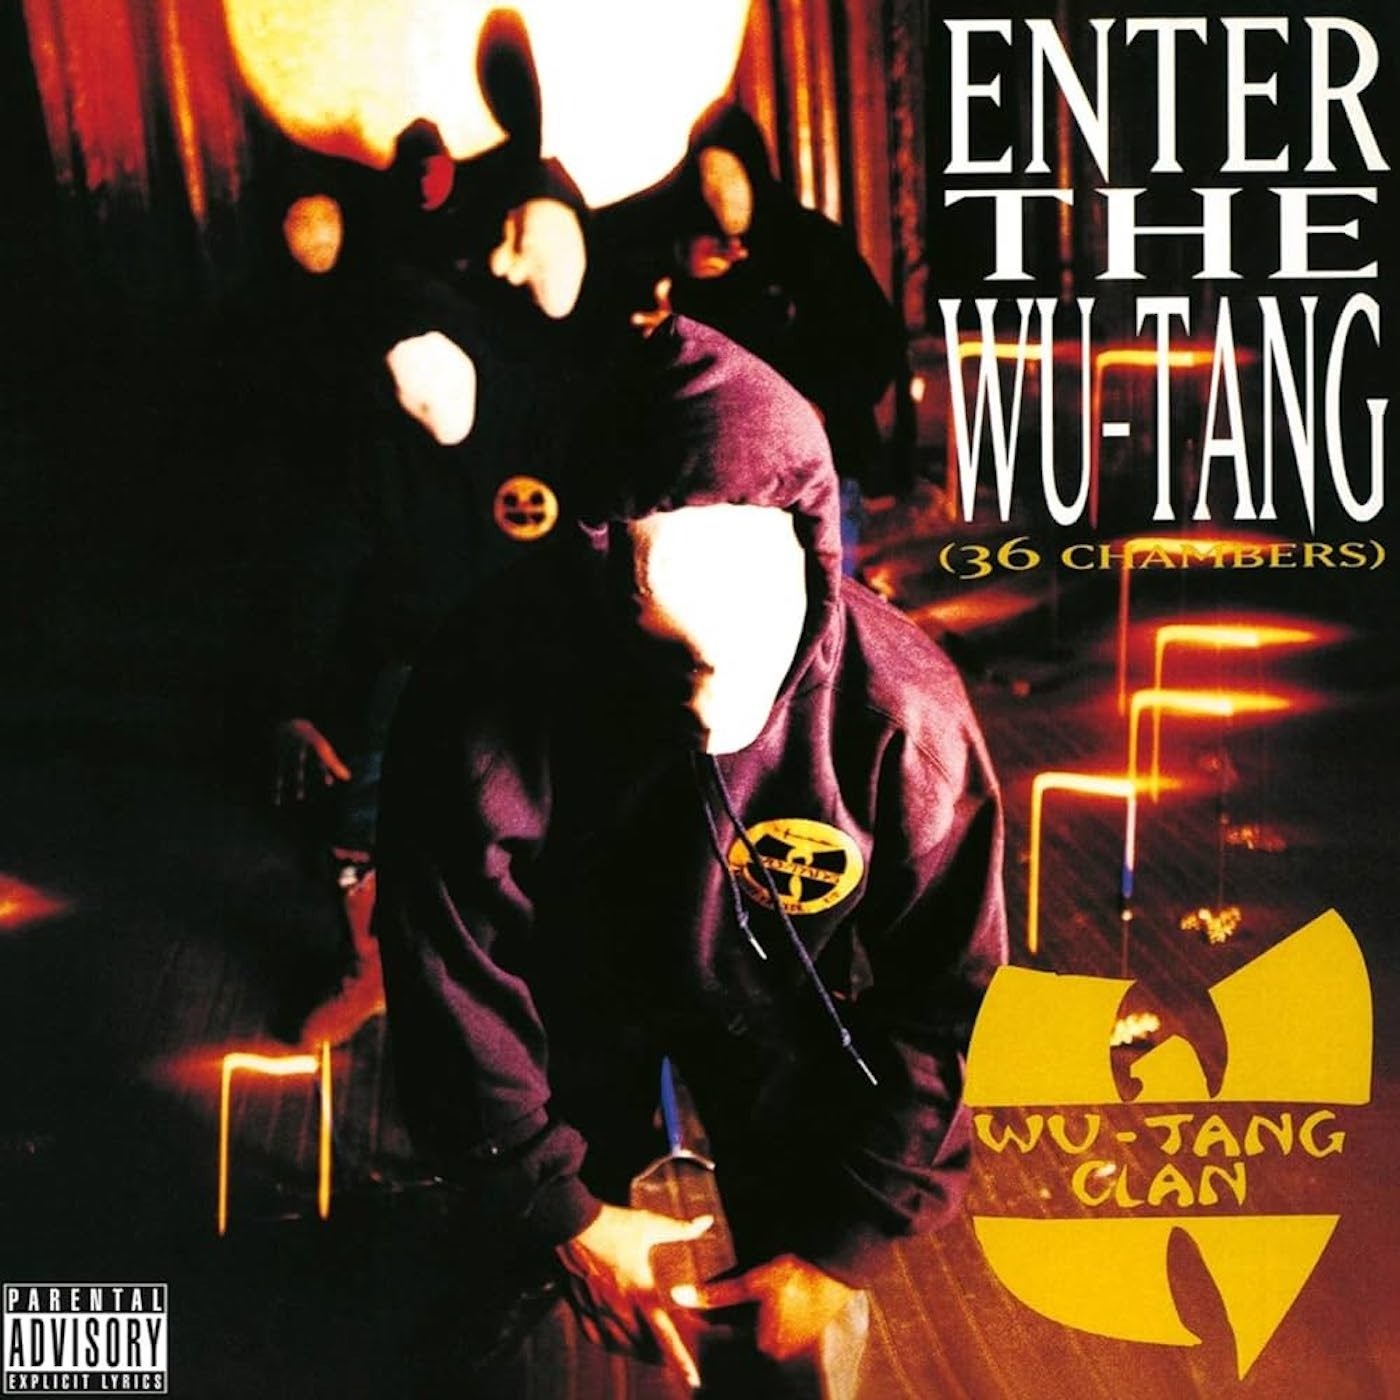 Wu-Tang Clan: Enter The Wu-Tang (36 Chambers) (1993). "The Rugged Lands of Shaolin"